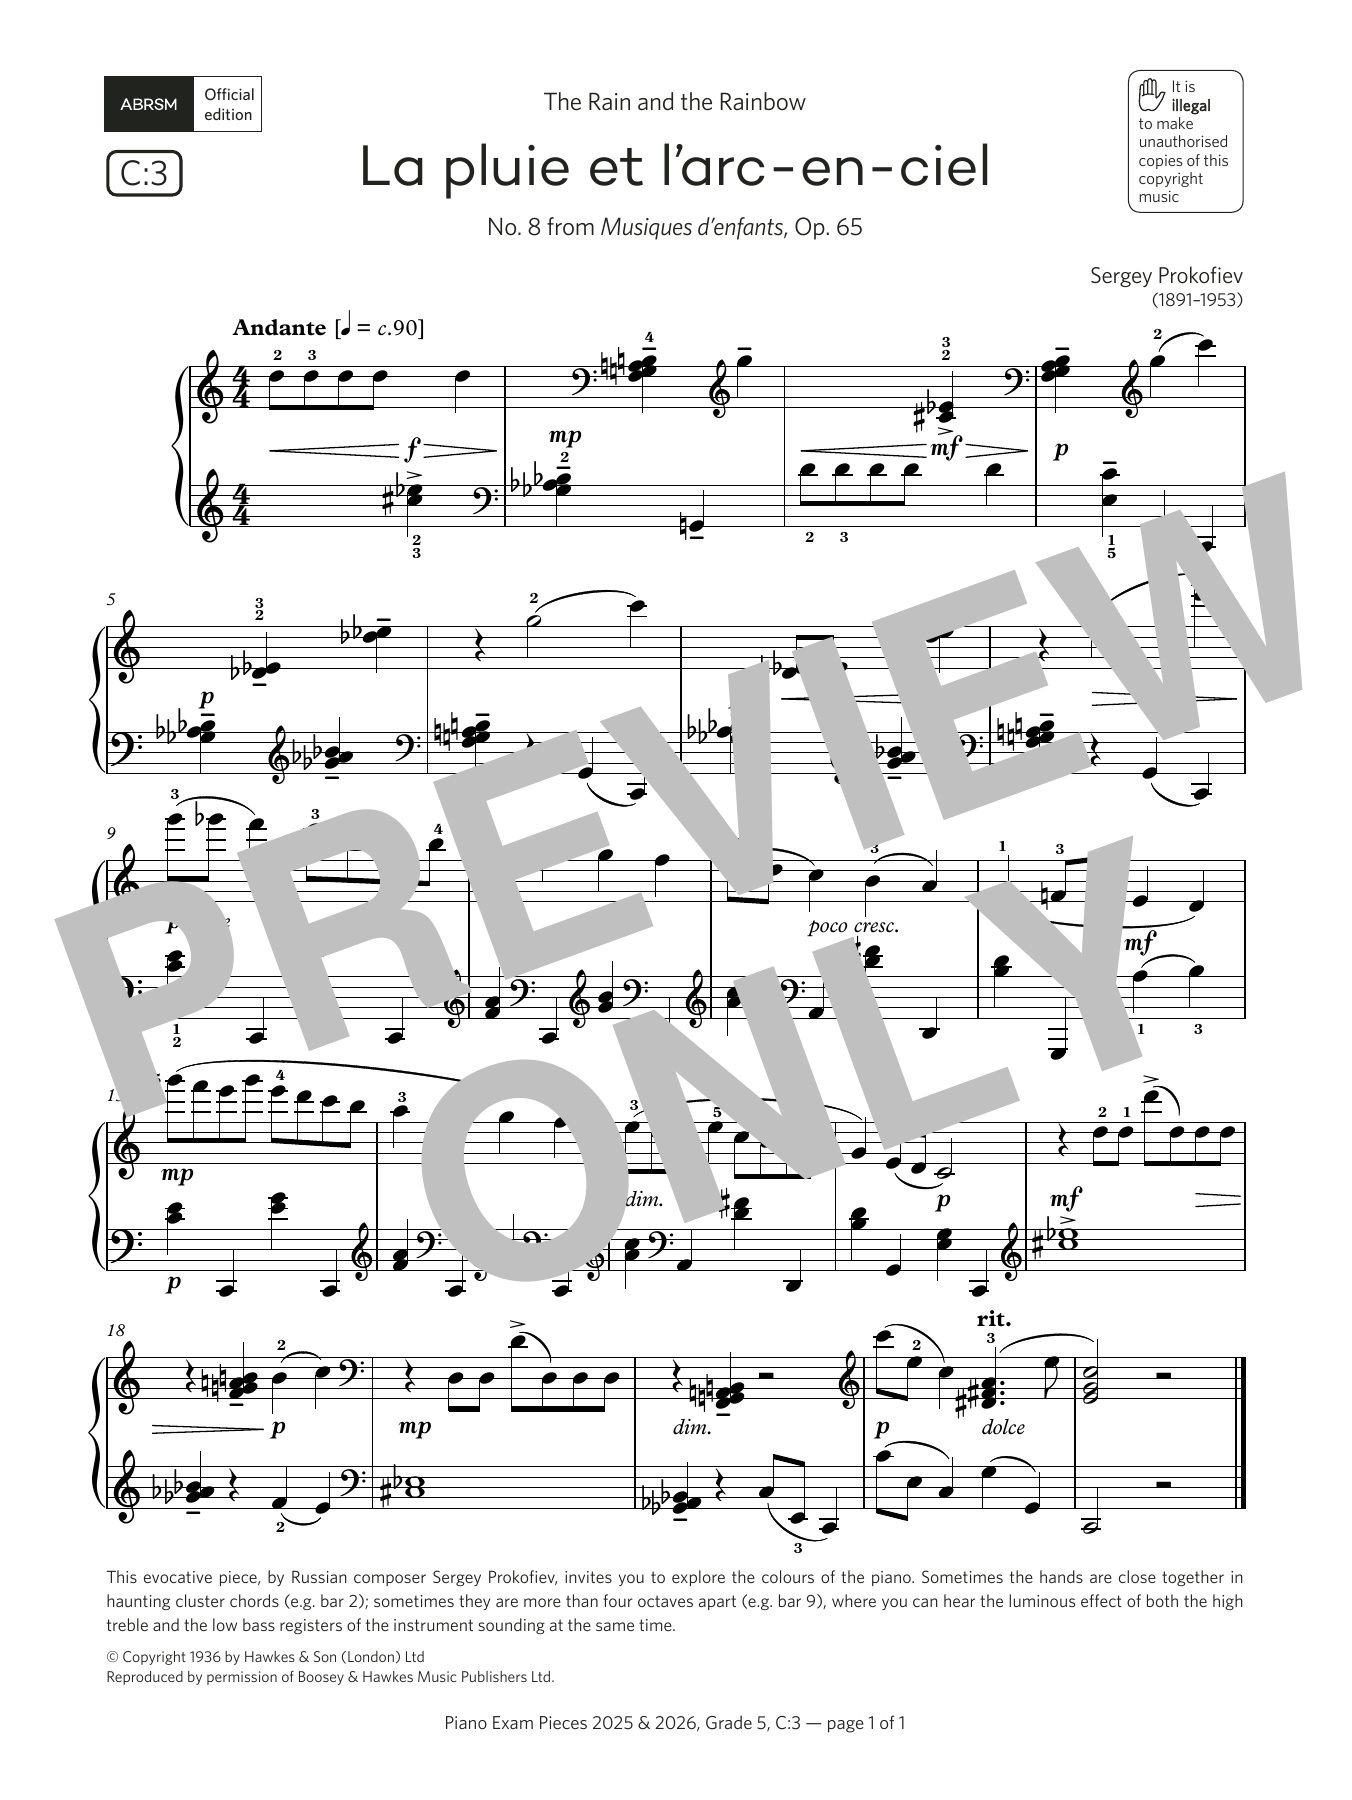 Sergei Prokofiev La pluie et l'arc-en-ciel (Grade 5, list C3, from the ABRSM Piano Syllabus 2025 & 2026) sheet music notes and chords arranged for Piano Solo